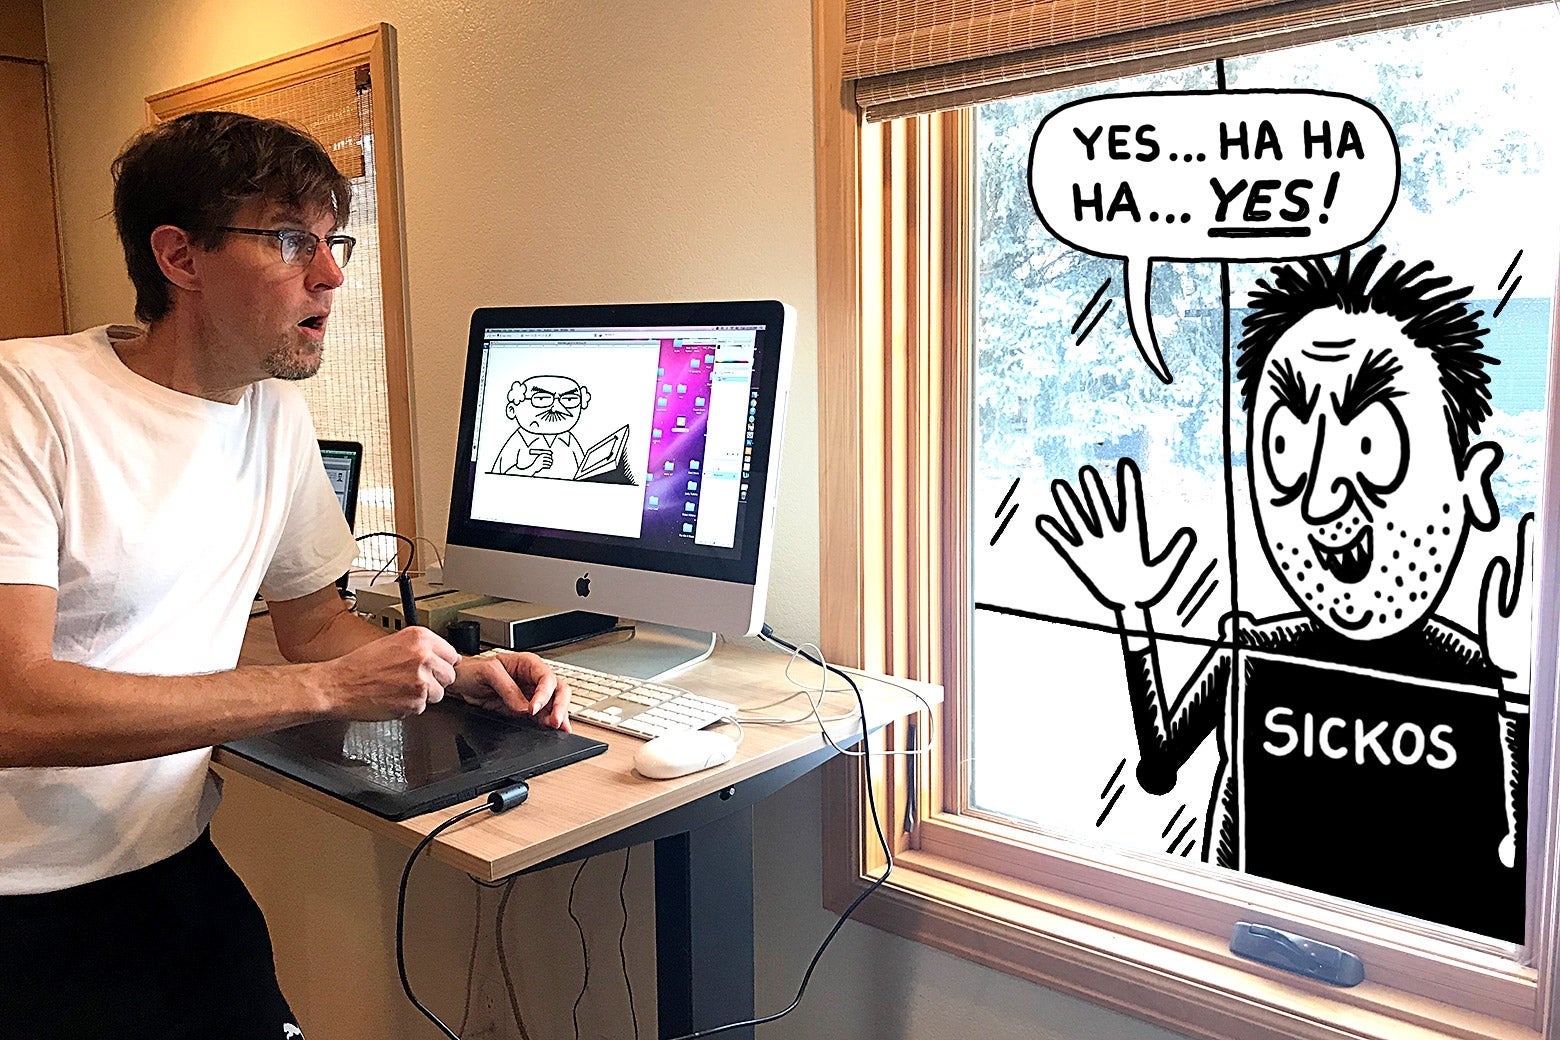 Cartoonist Ward Sutton notices his Sickos cartoon staring at him through the window.